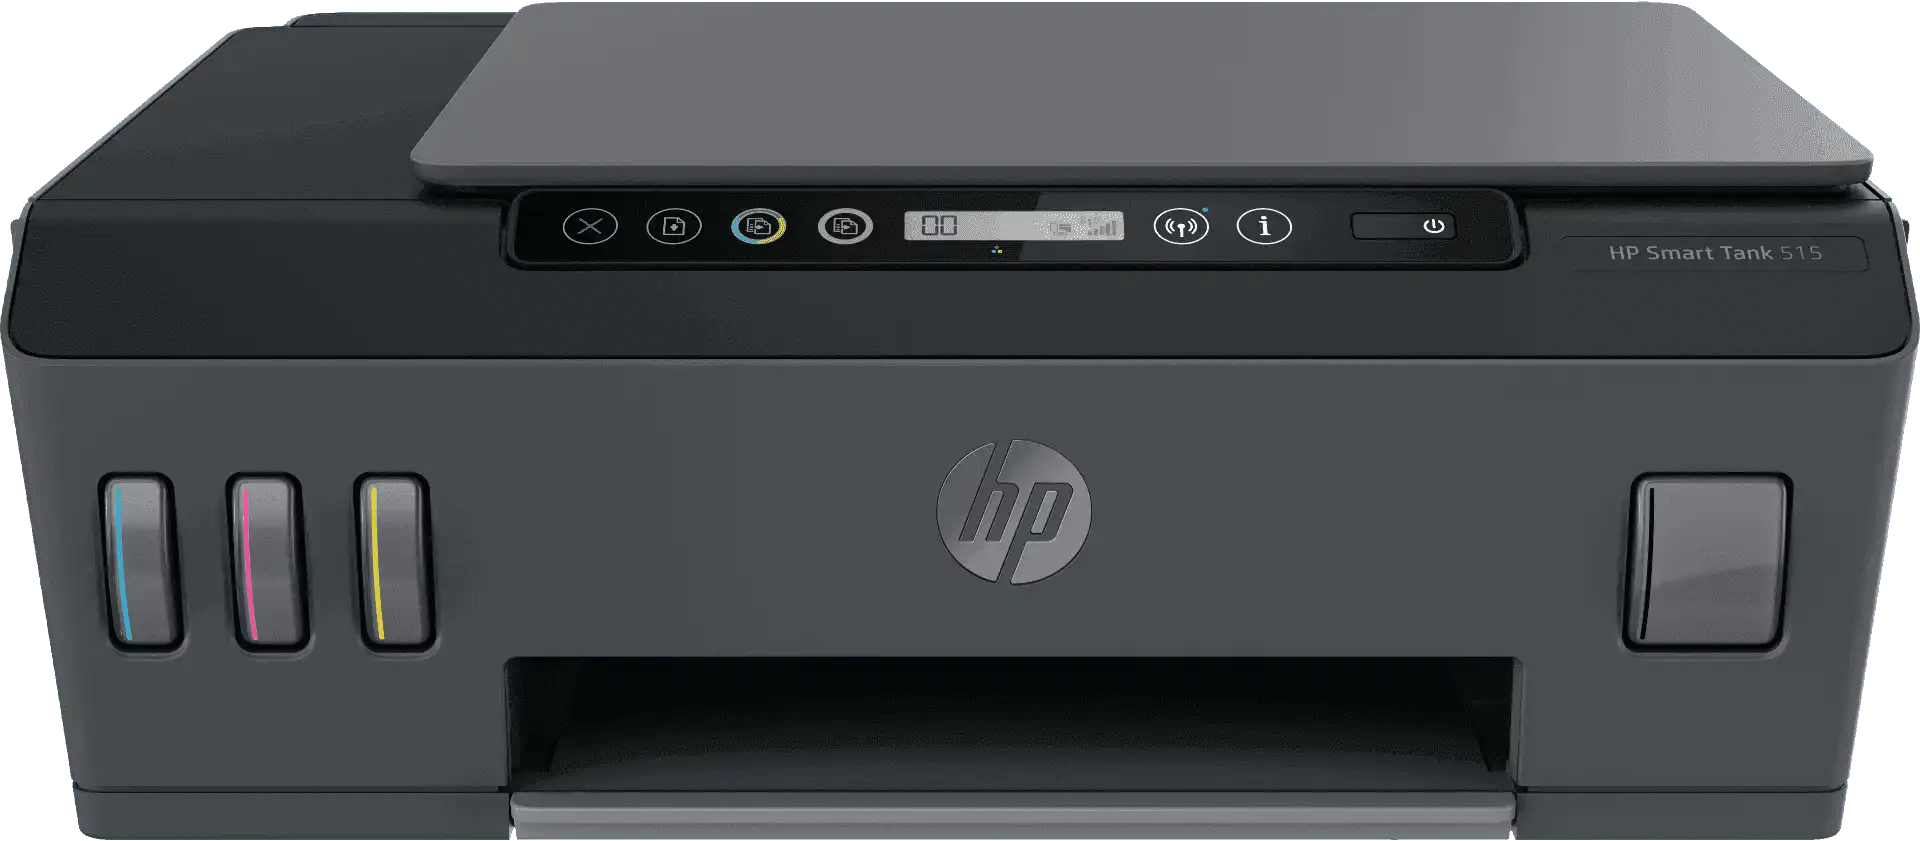 HP 1TJ09A Smart Tank 515 Wireless All-in-One Thermal Inkjet Printer